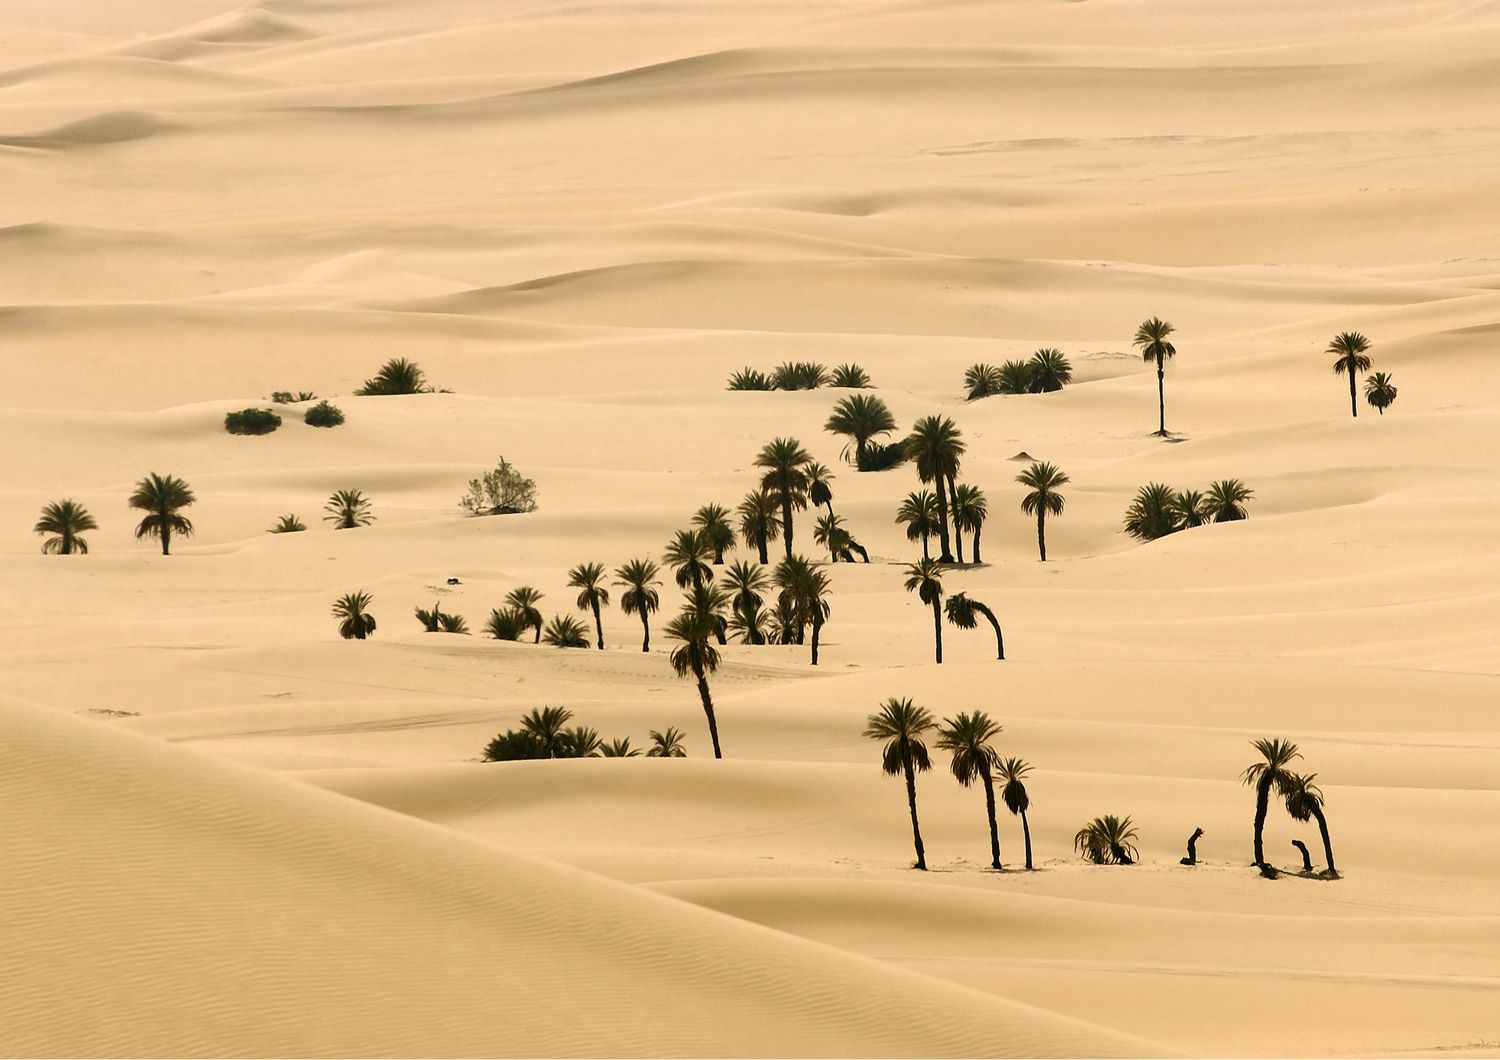 &nbsp;Deserto del Sahara